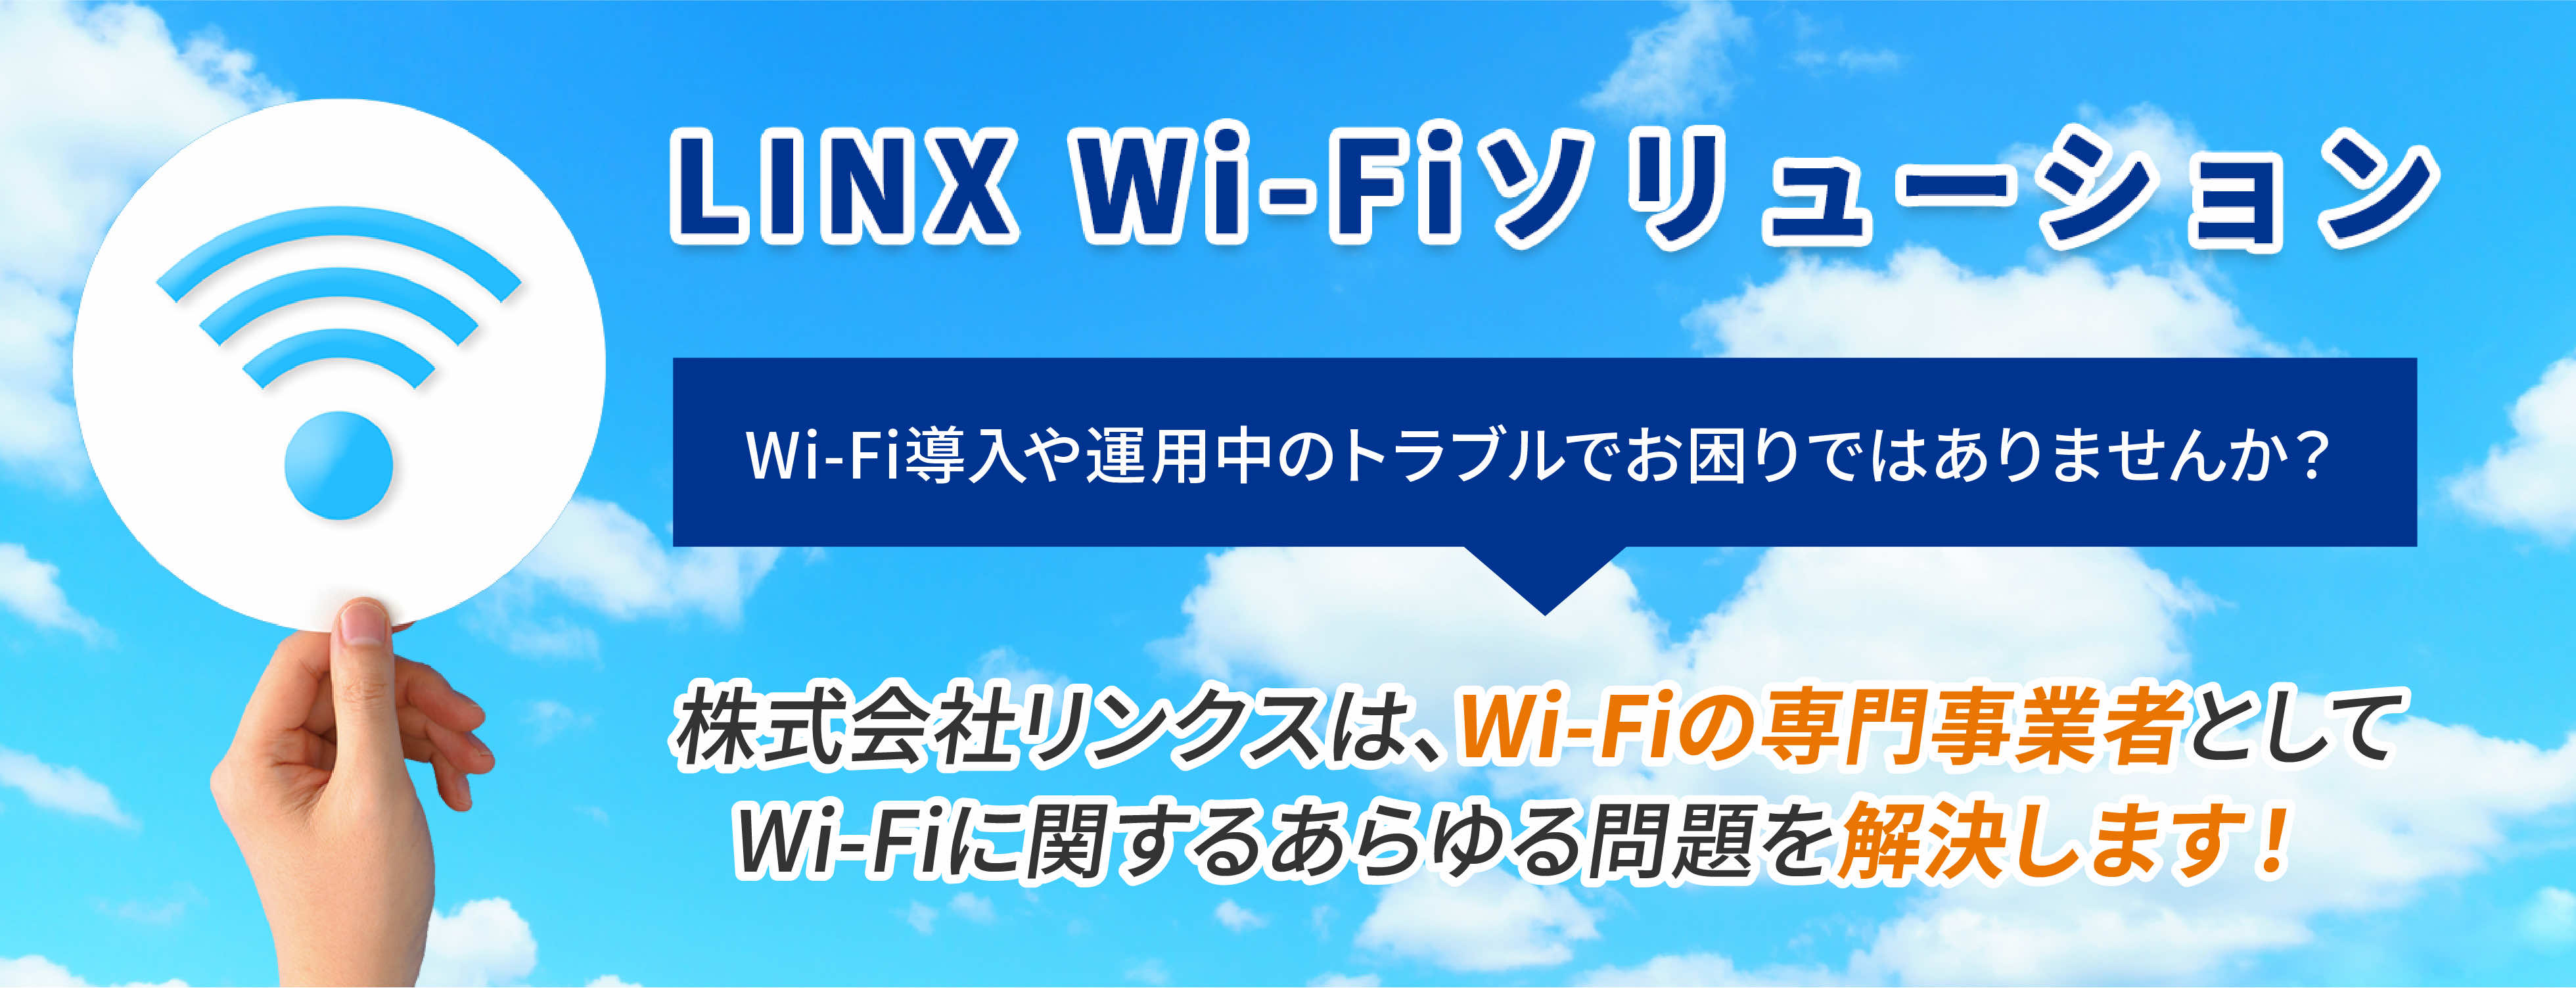 LINX Wi-Fiソリューション